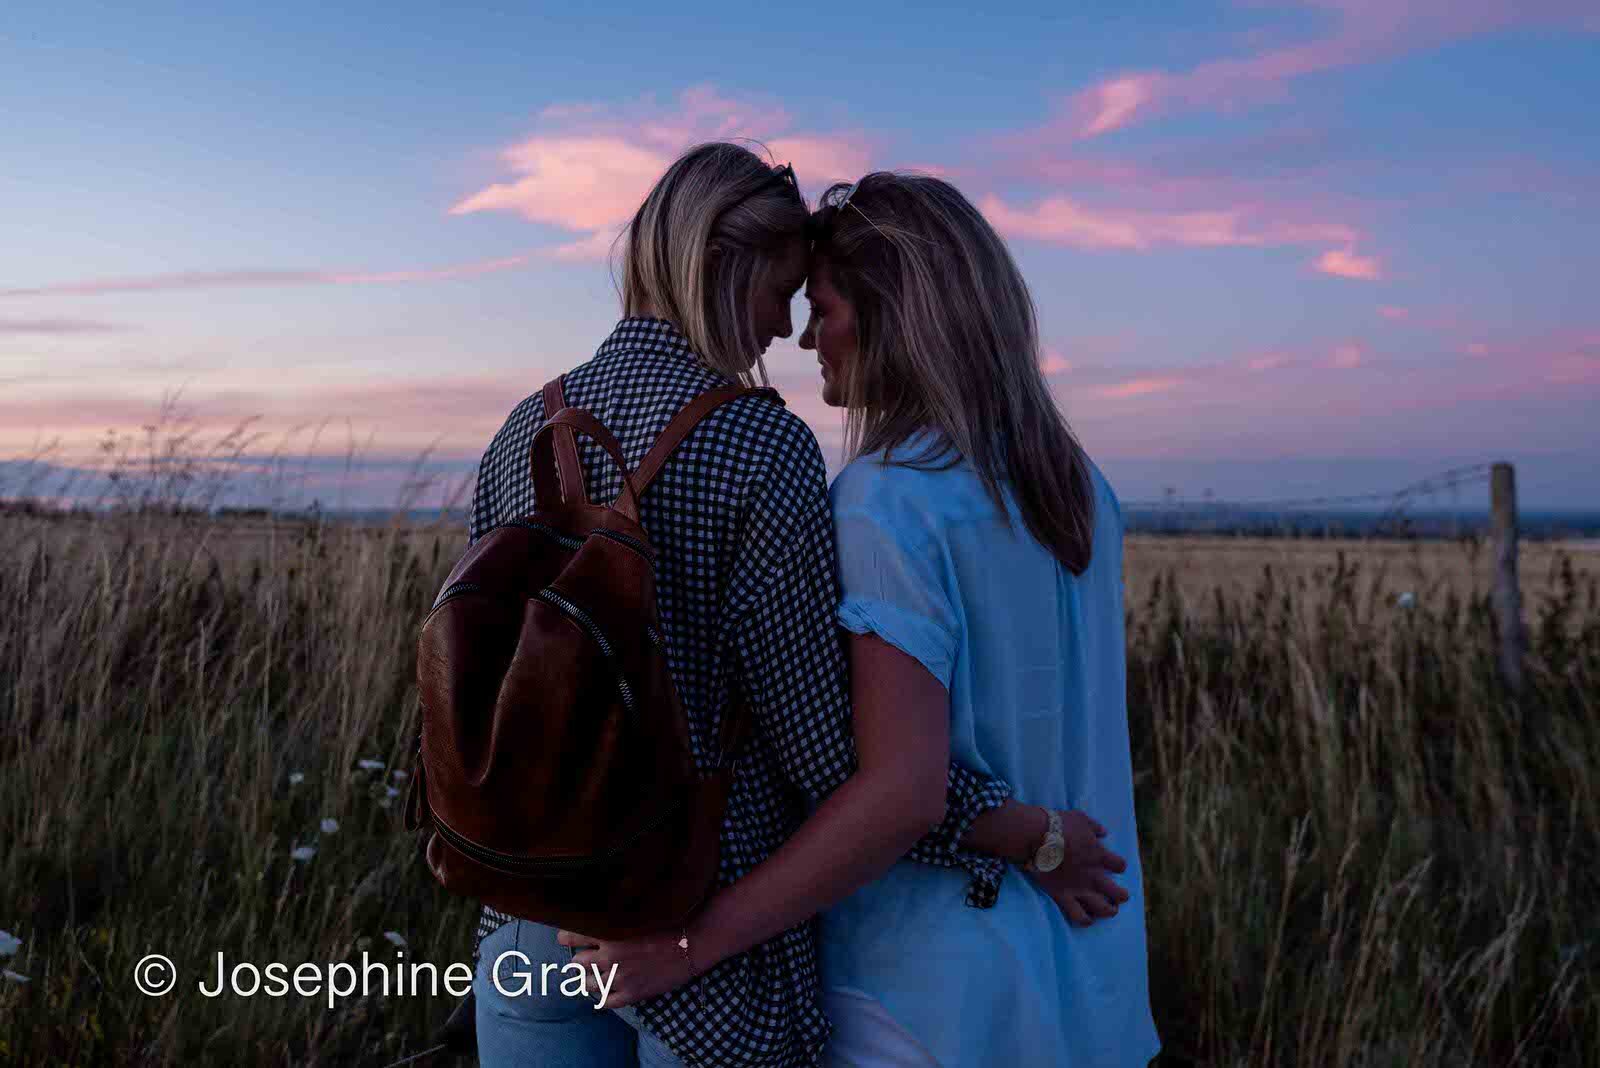 Wedding photographer Oxfordshire - Josephine Gray | Documentary wedding photography UK  Oxfordshire -60.jpg